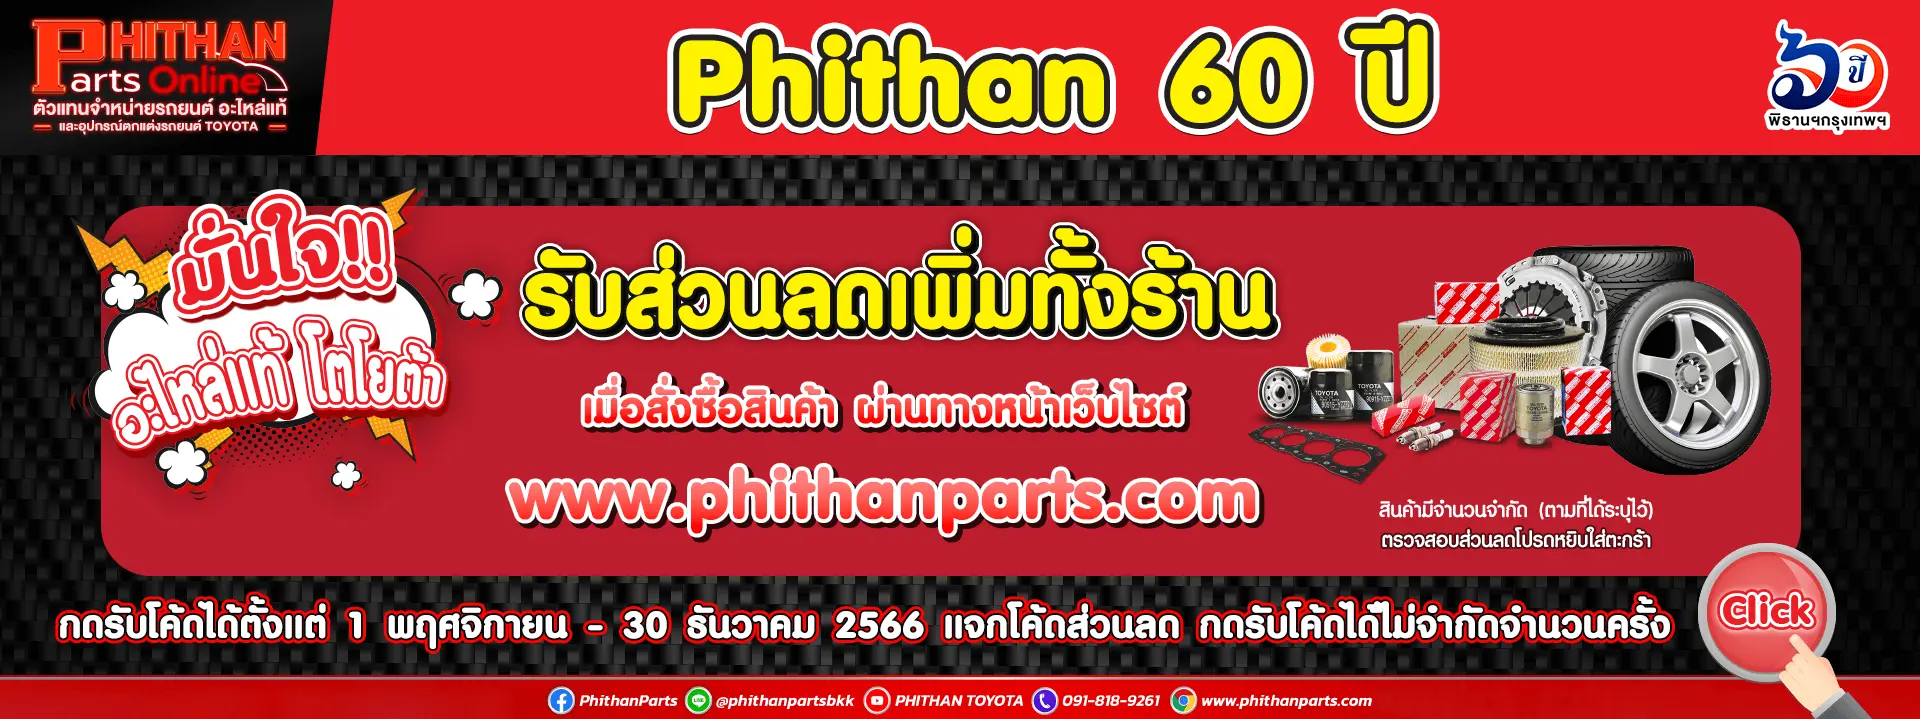 	Phithan Mid Year Sale รับส่วนลดพิเศษ เพิ่มเติม เมื่อสั่งซื้อสินค้าผ่านทางหน้าเว็บไซต์